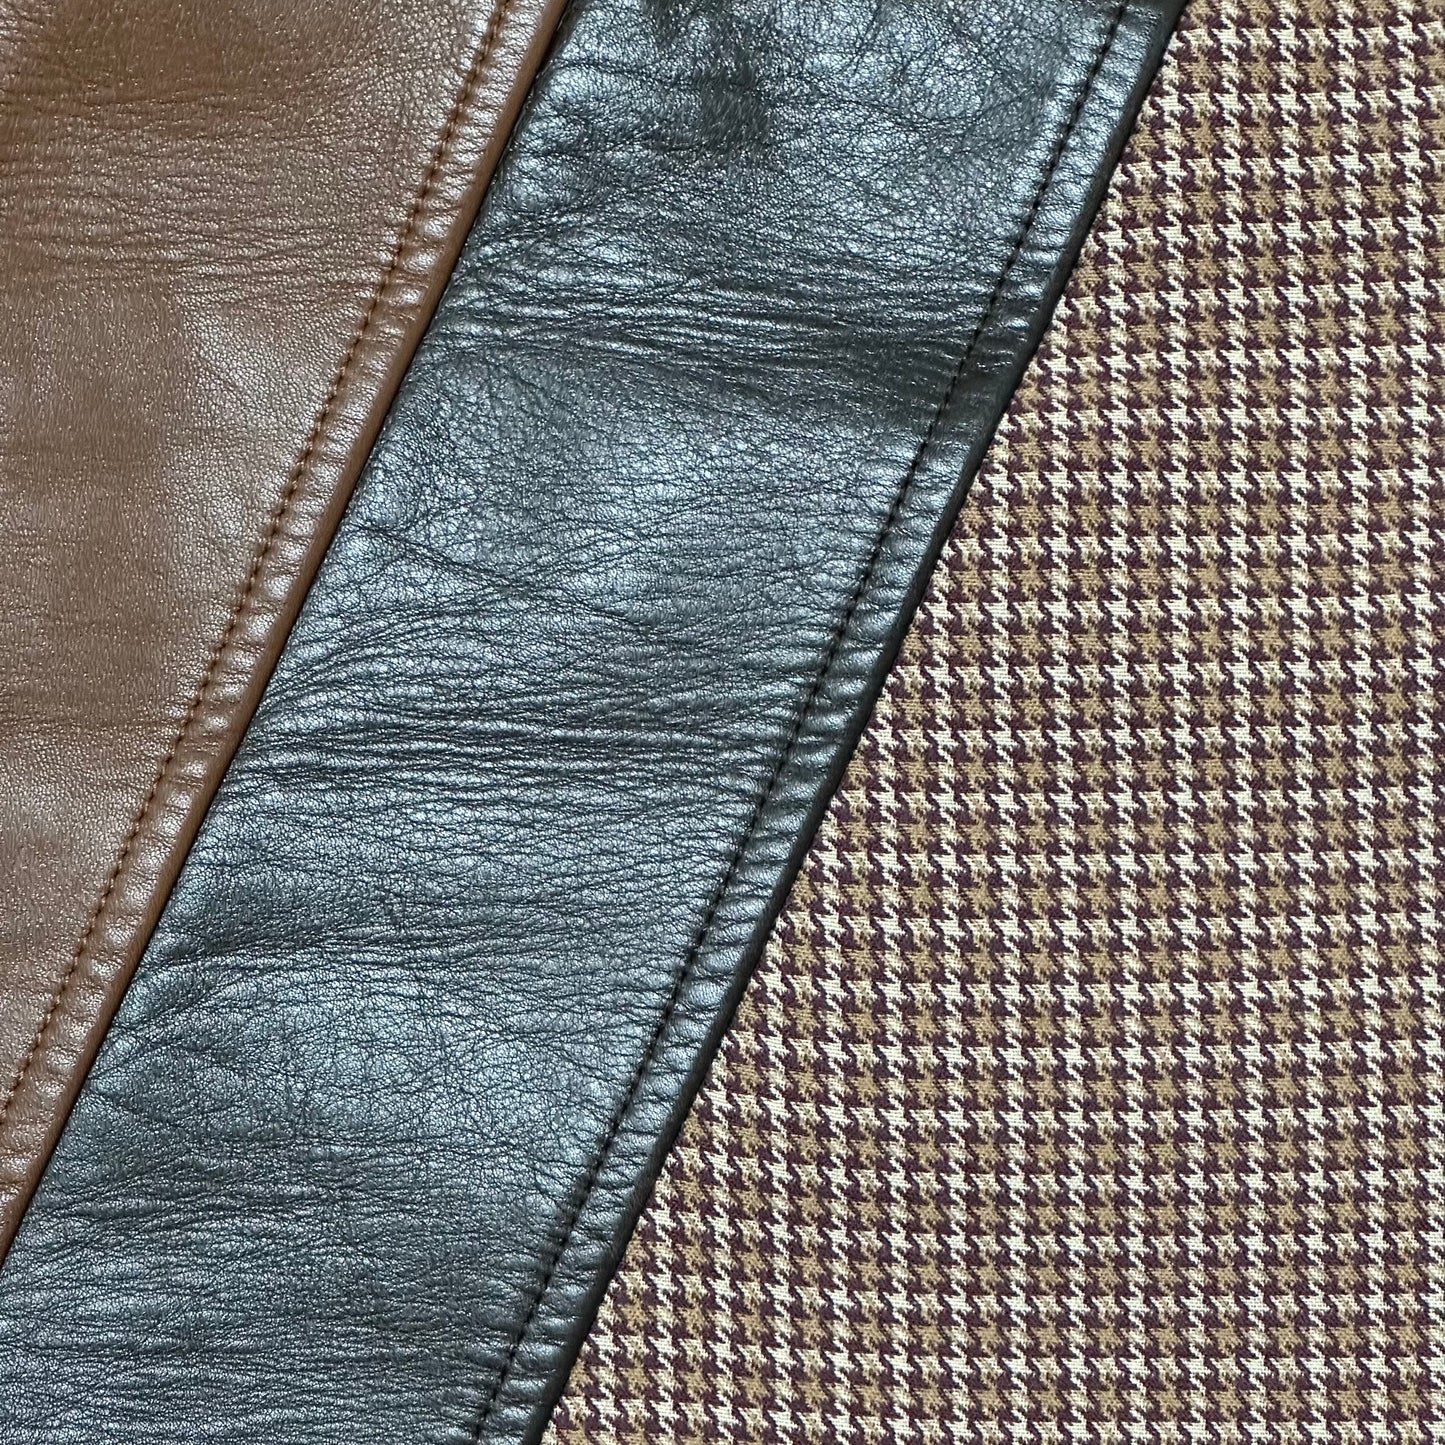 MIU MIU Fall Winter 2014 Houndstooth Leather Trim Mini Skirt